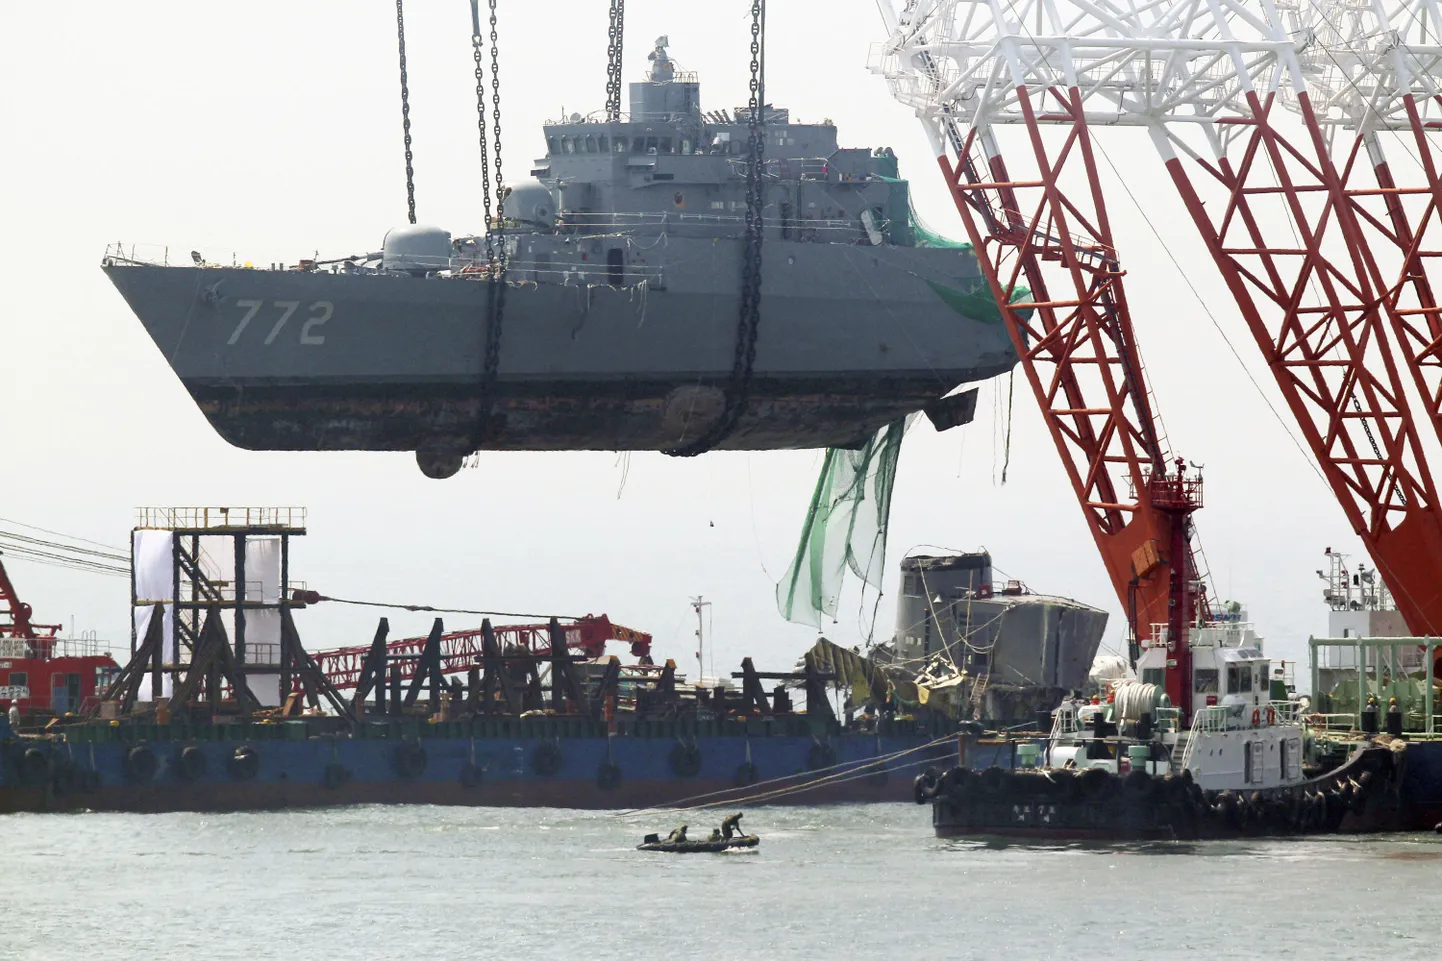 Останки корабля "Чхонан" поднимают на поверхность.